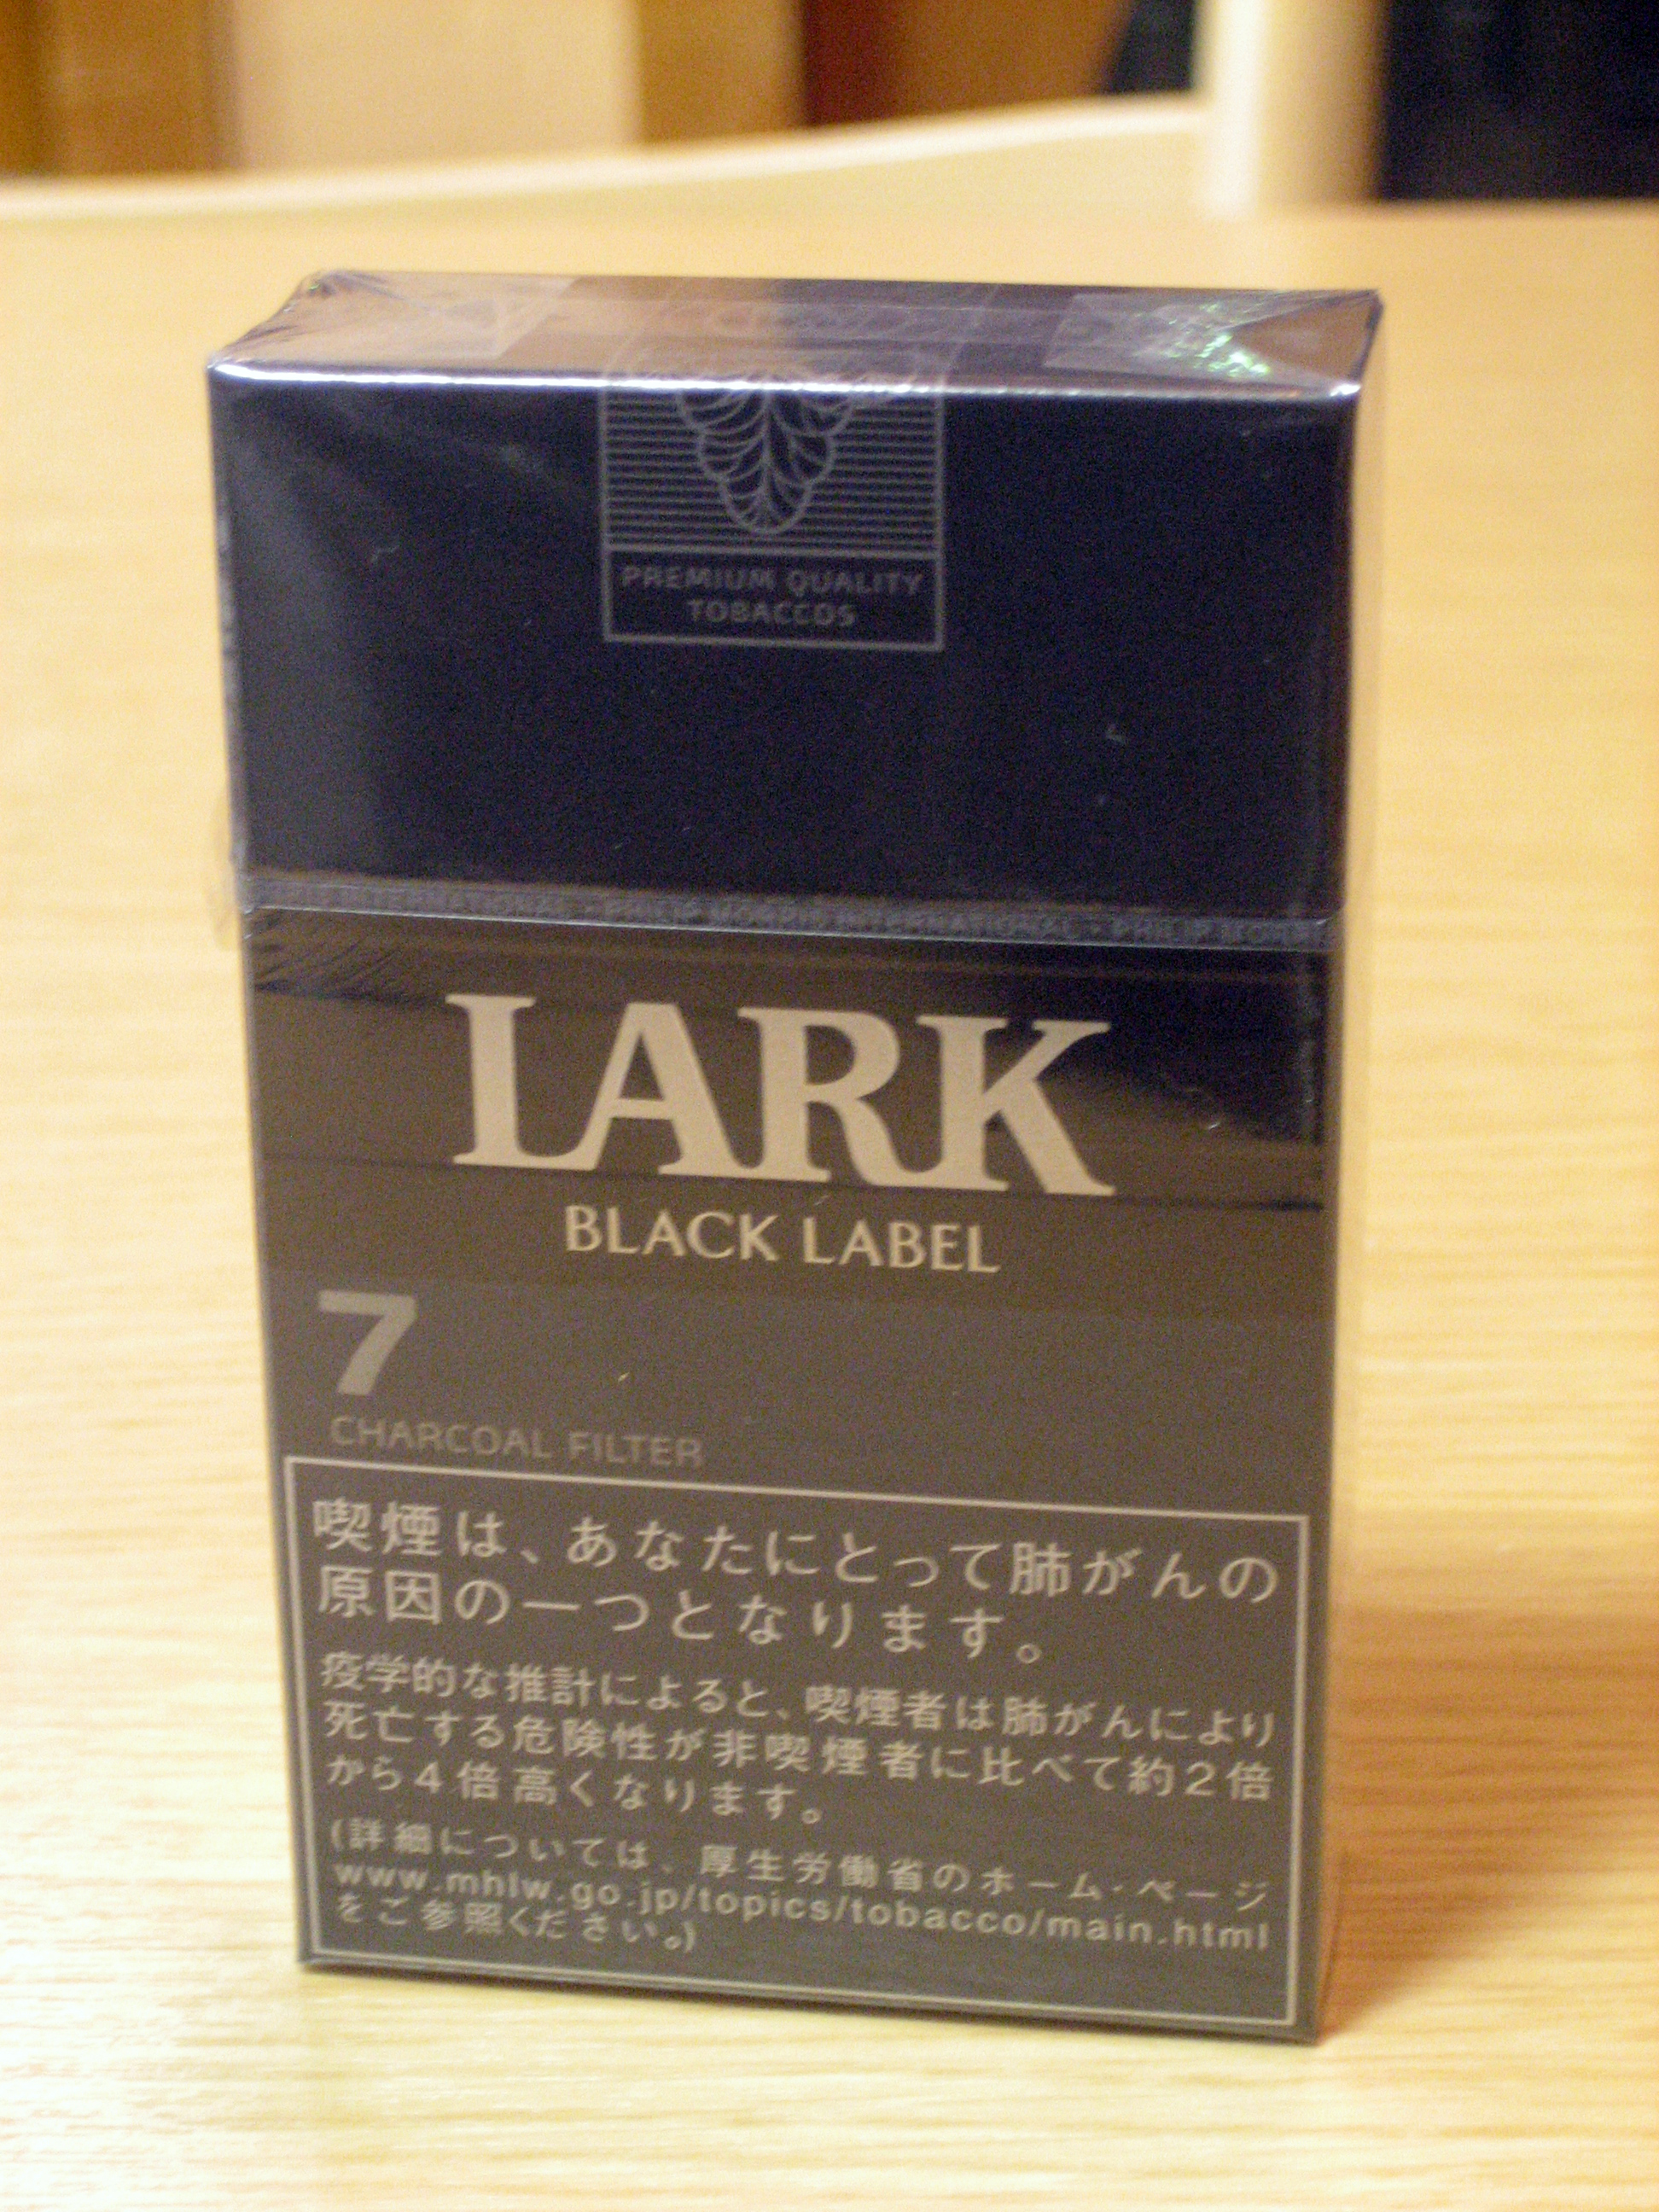 LARK Black Label.JPG